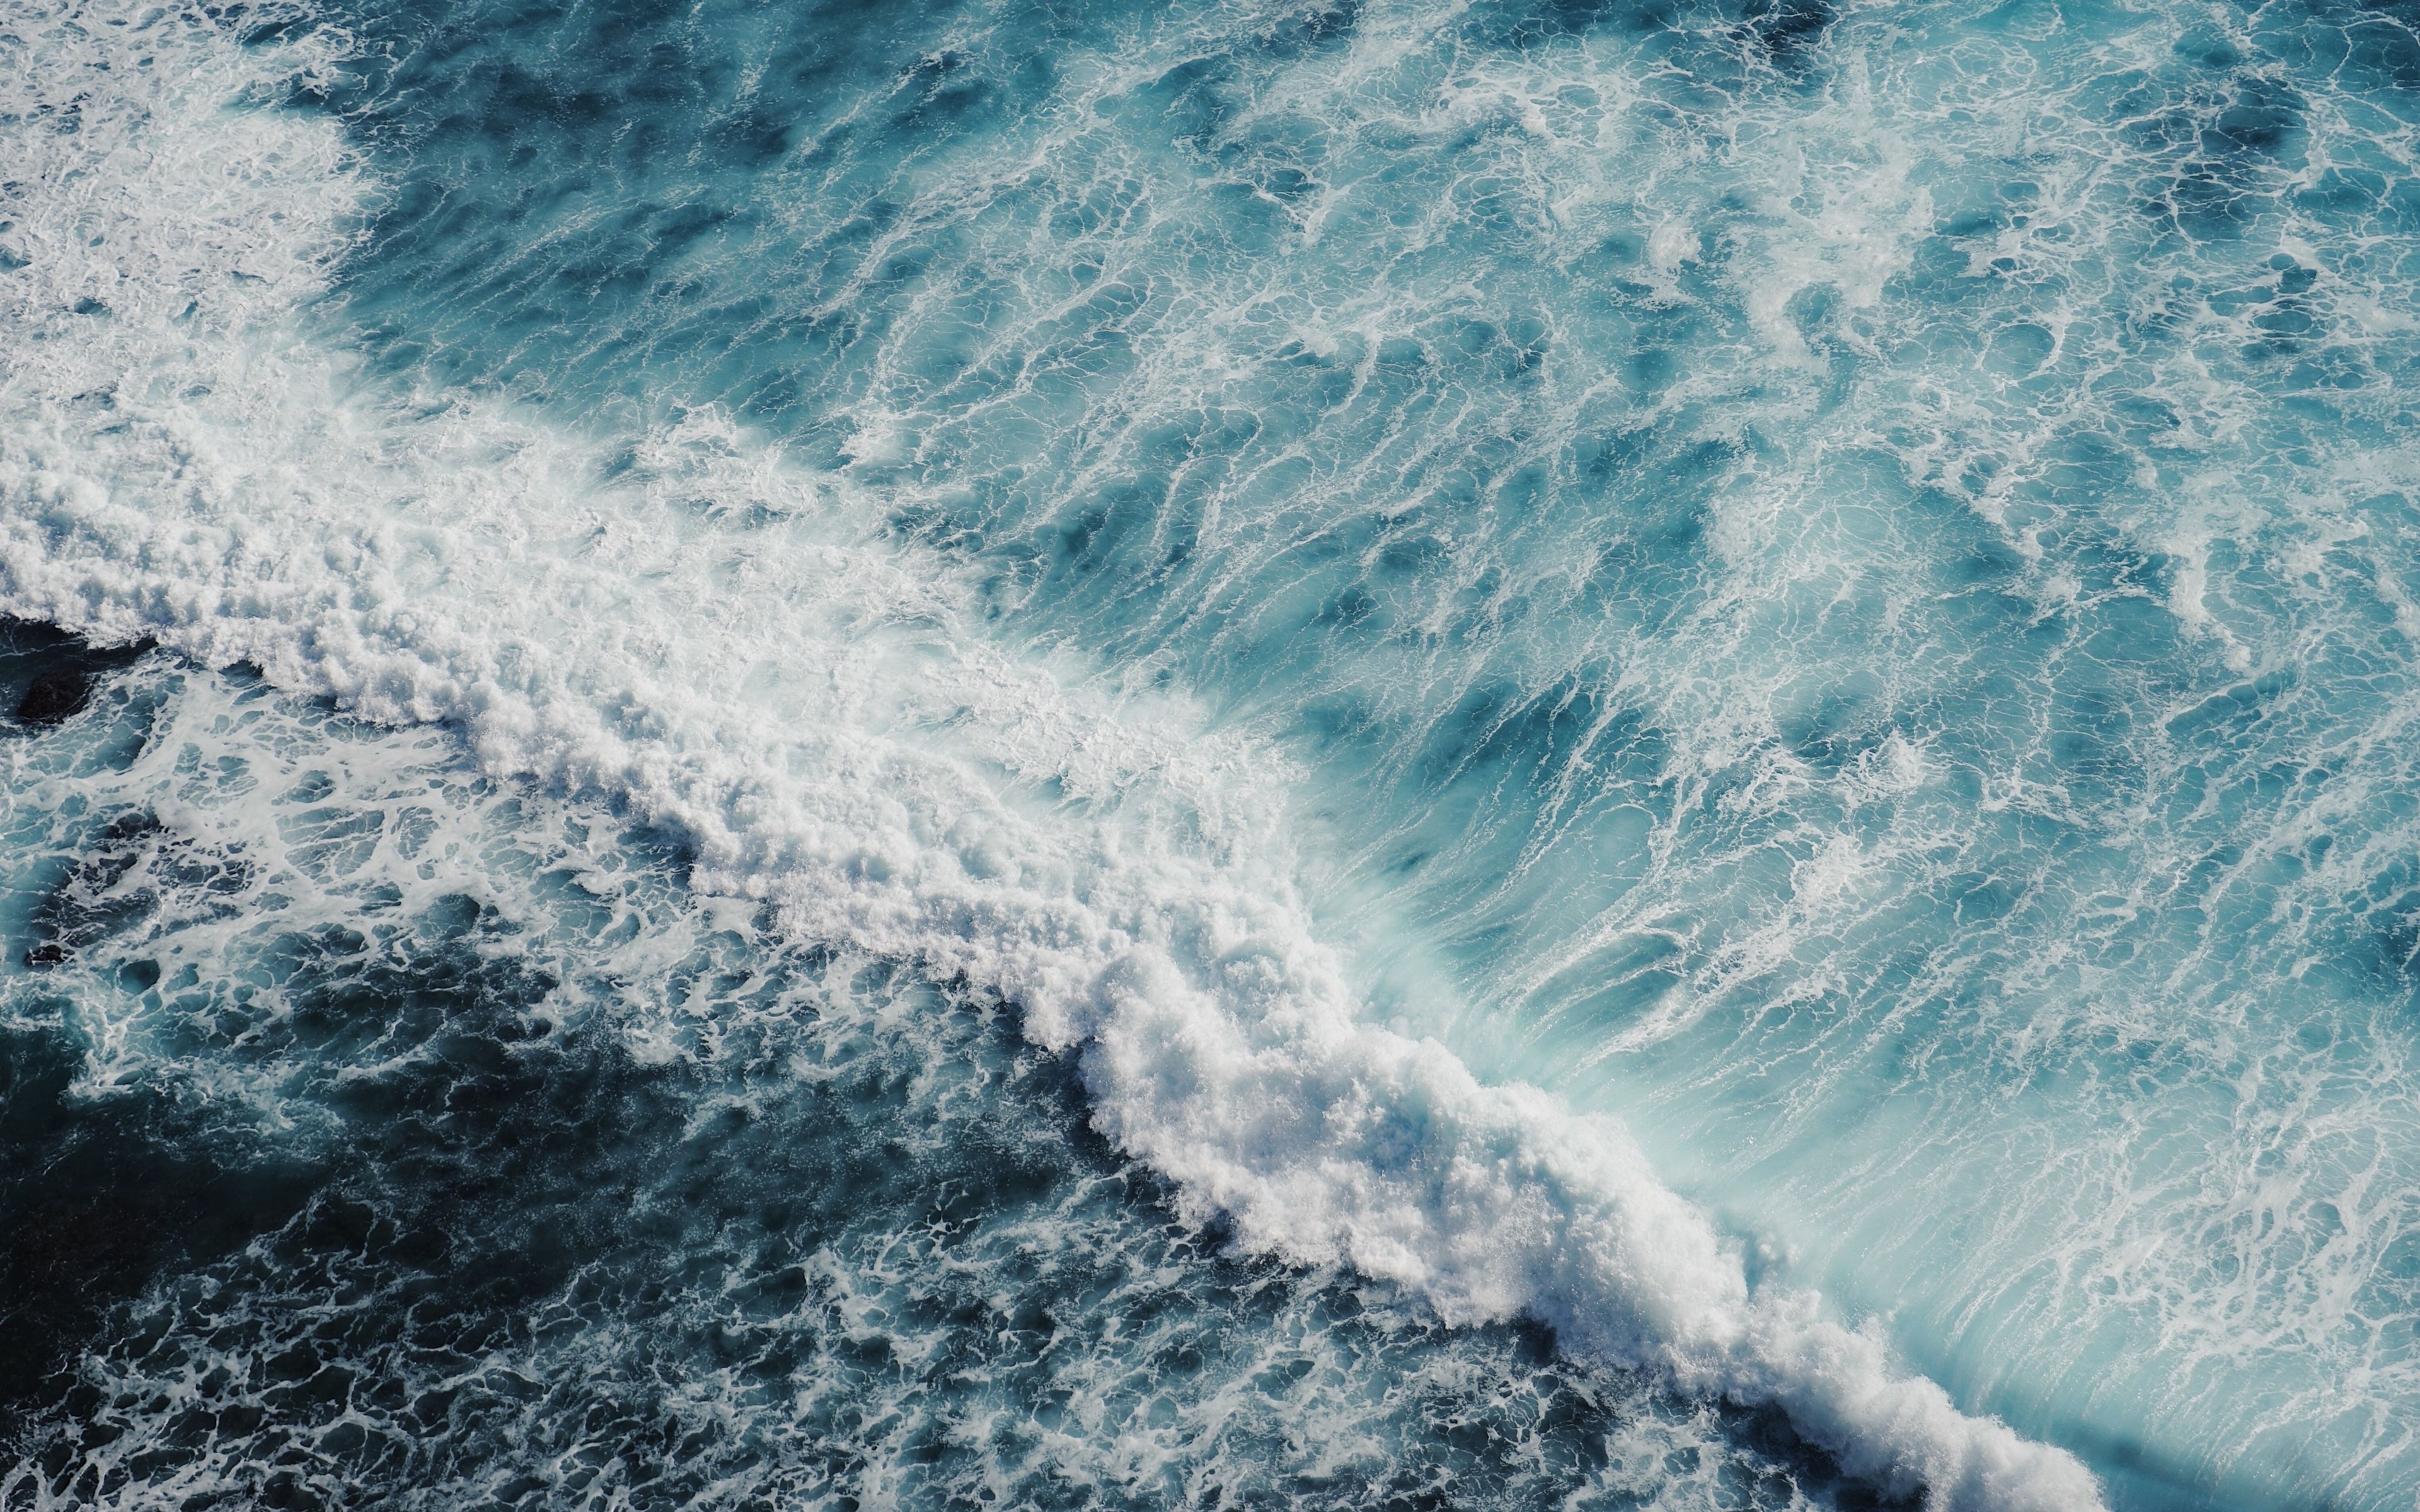 Waves Sea Wallpapers